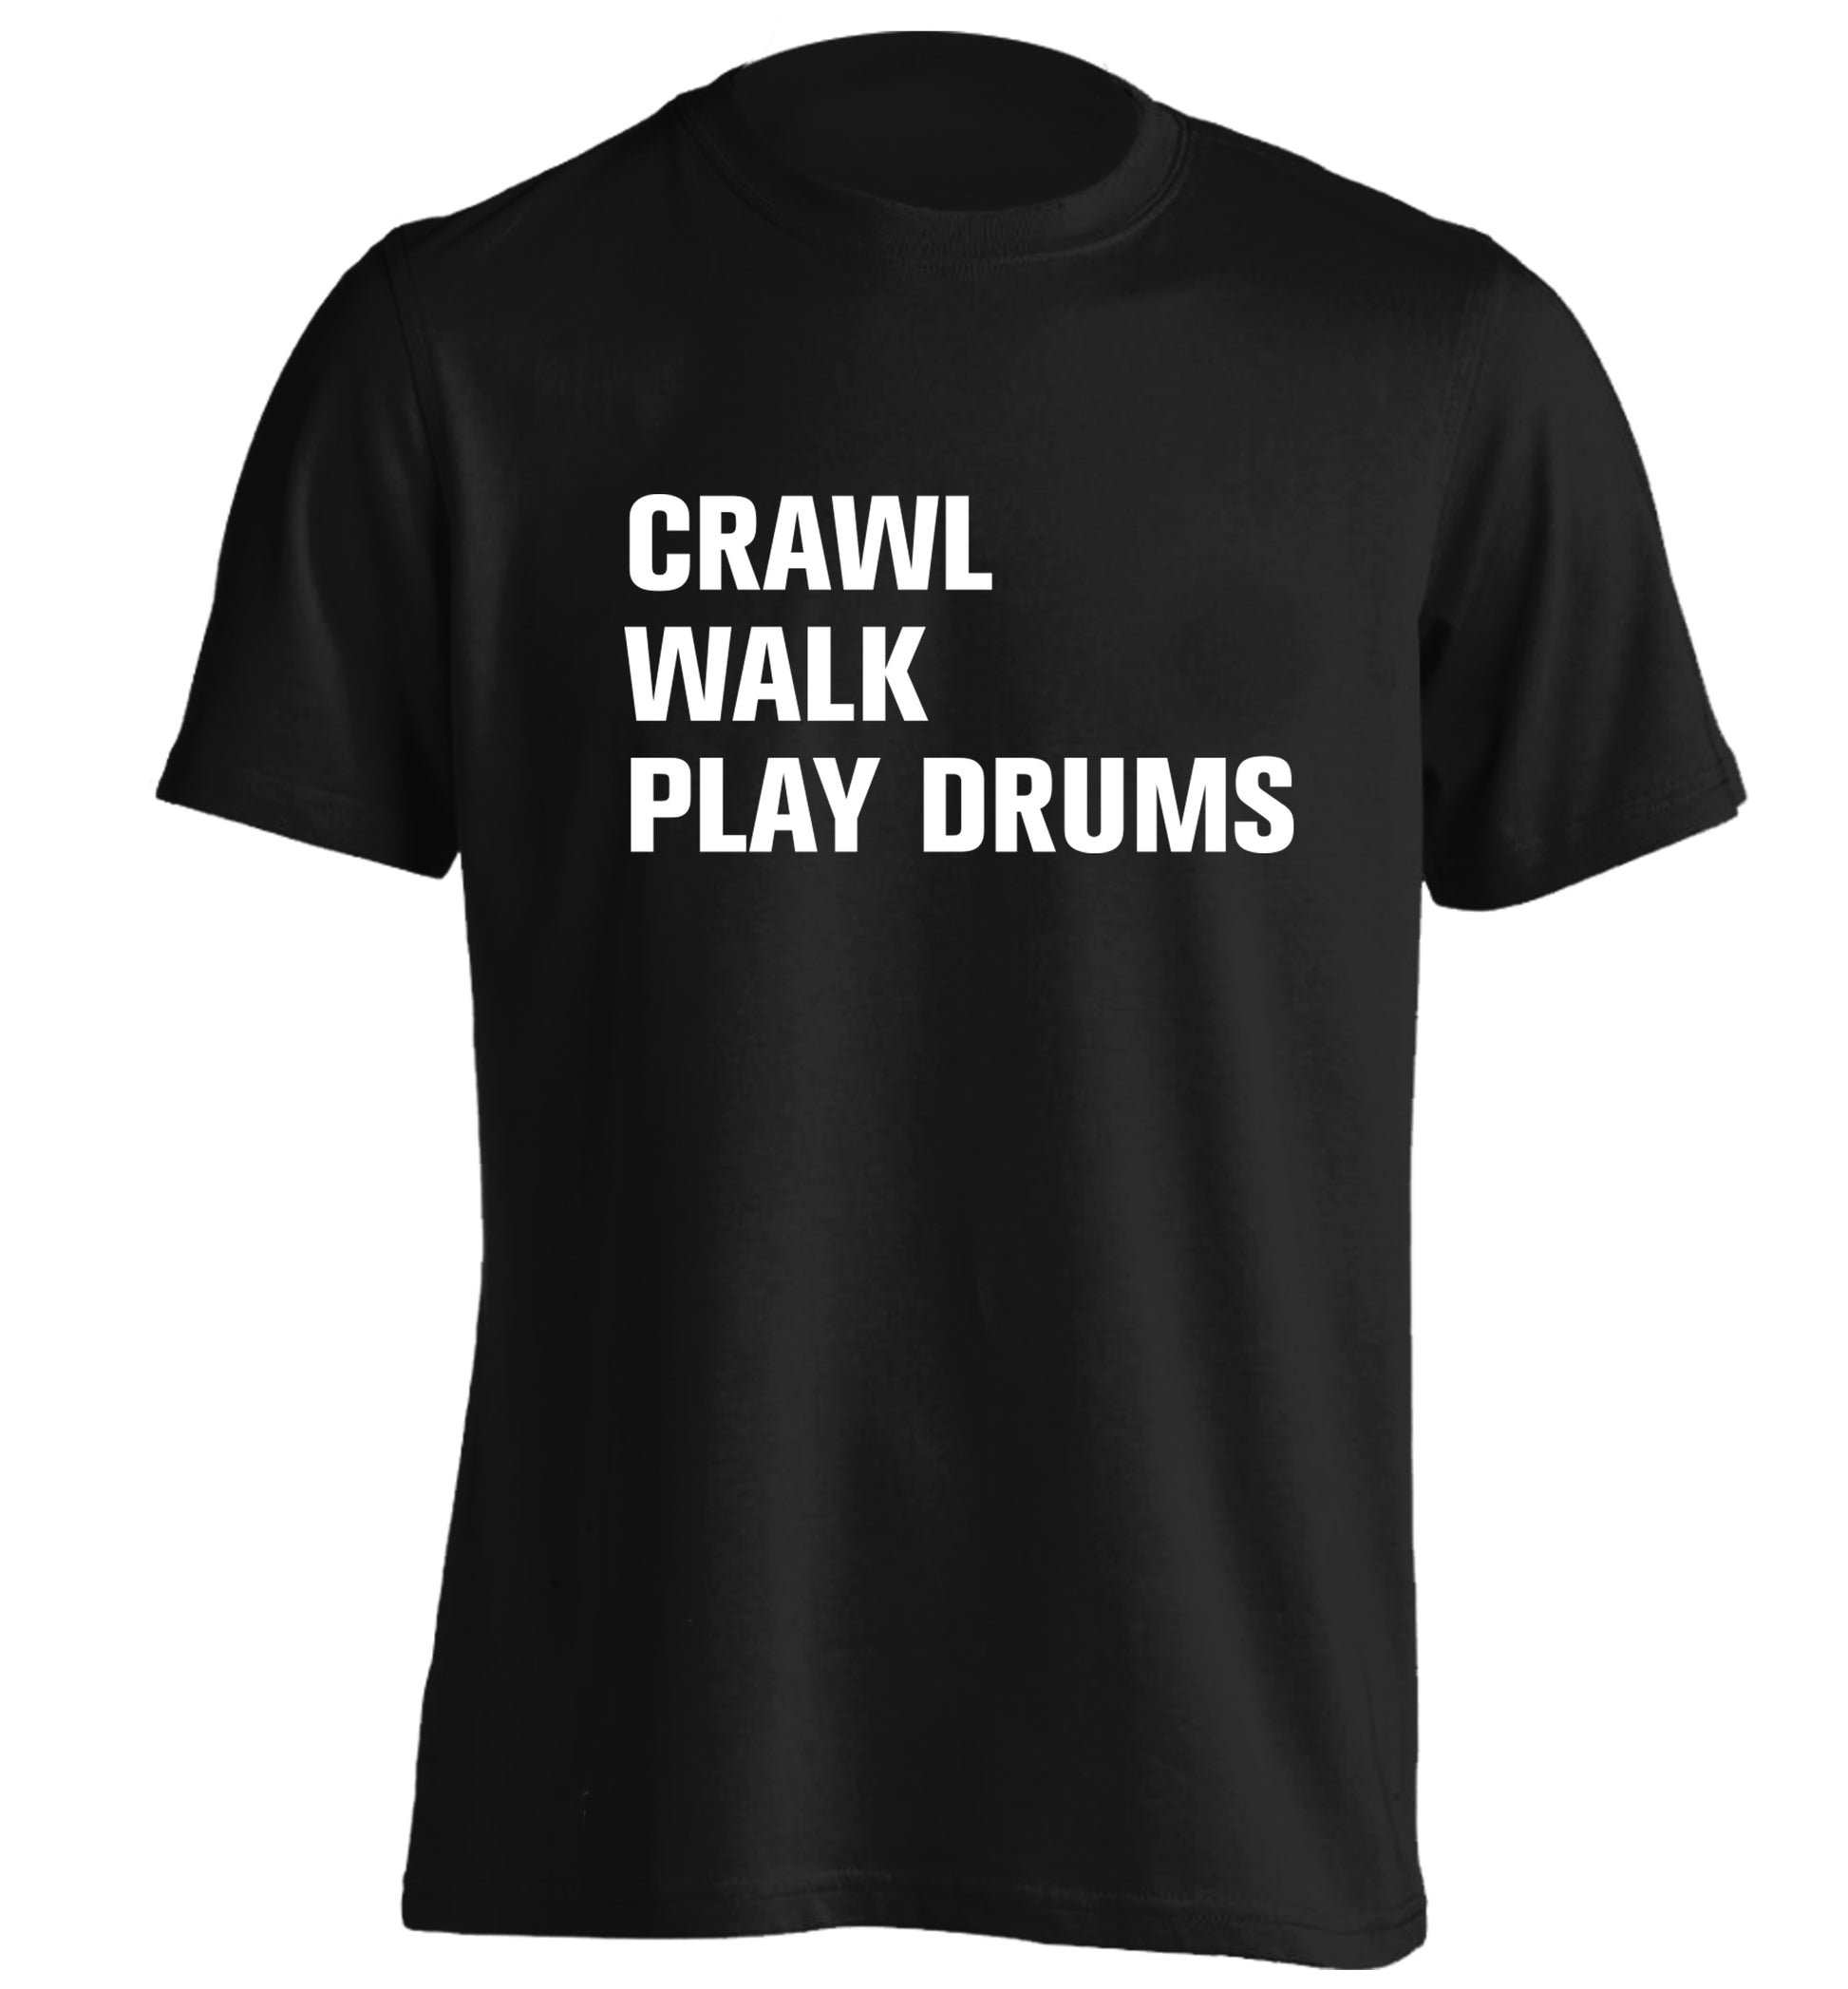 Crawl walk play drums adults unisex black Tshirt 2XL